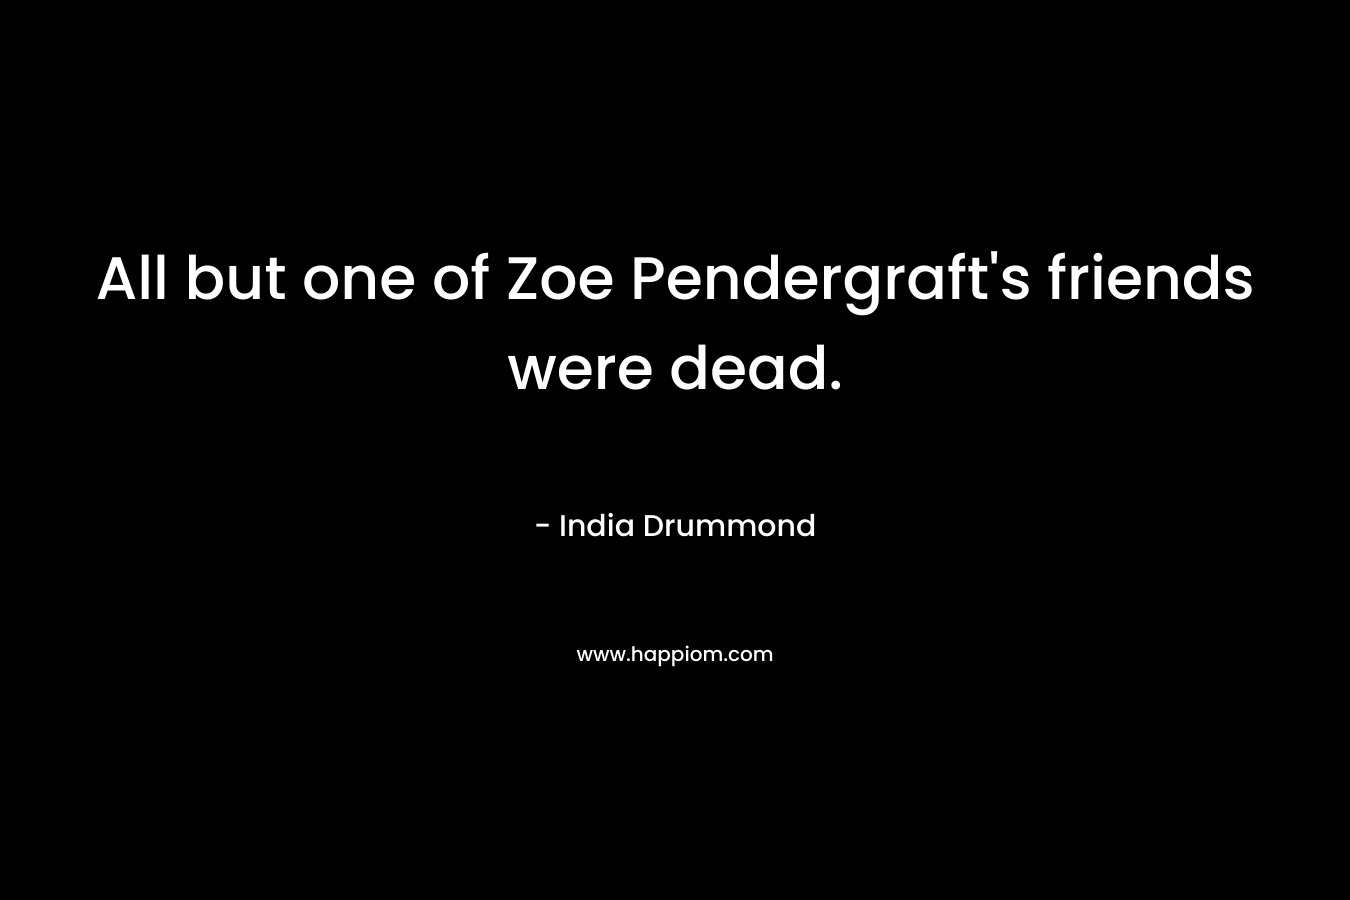 All but one of Zoe Pendergraft's friends were dead.